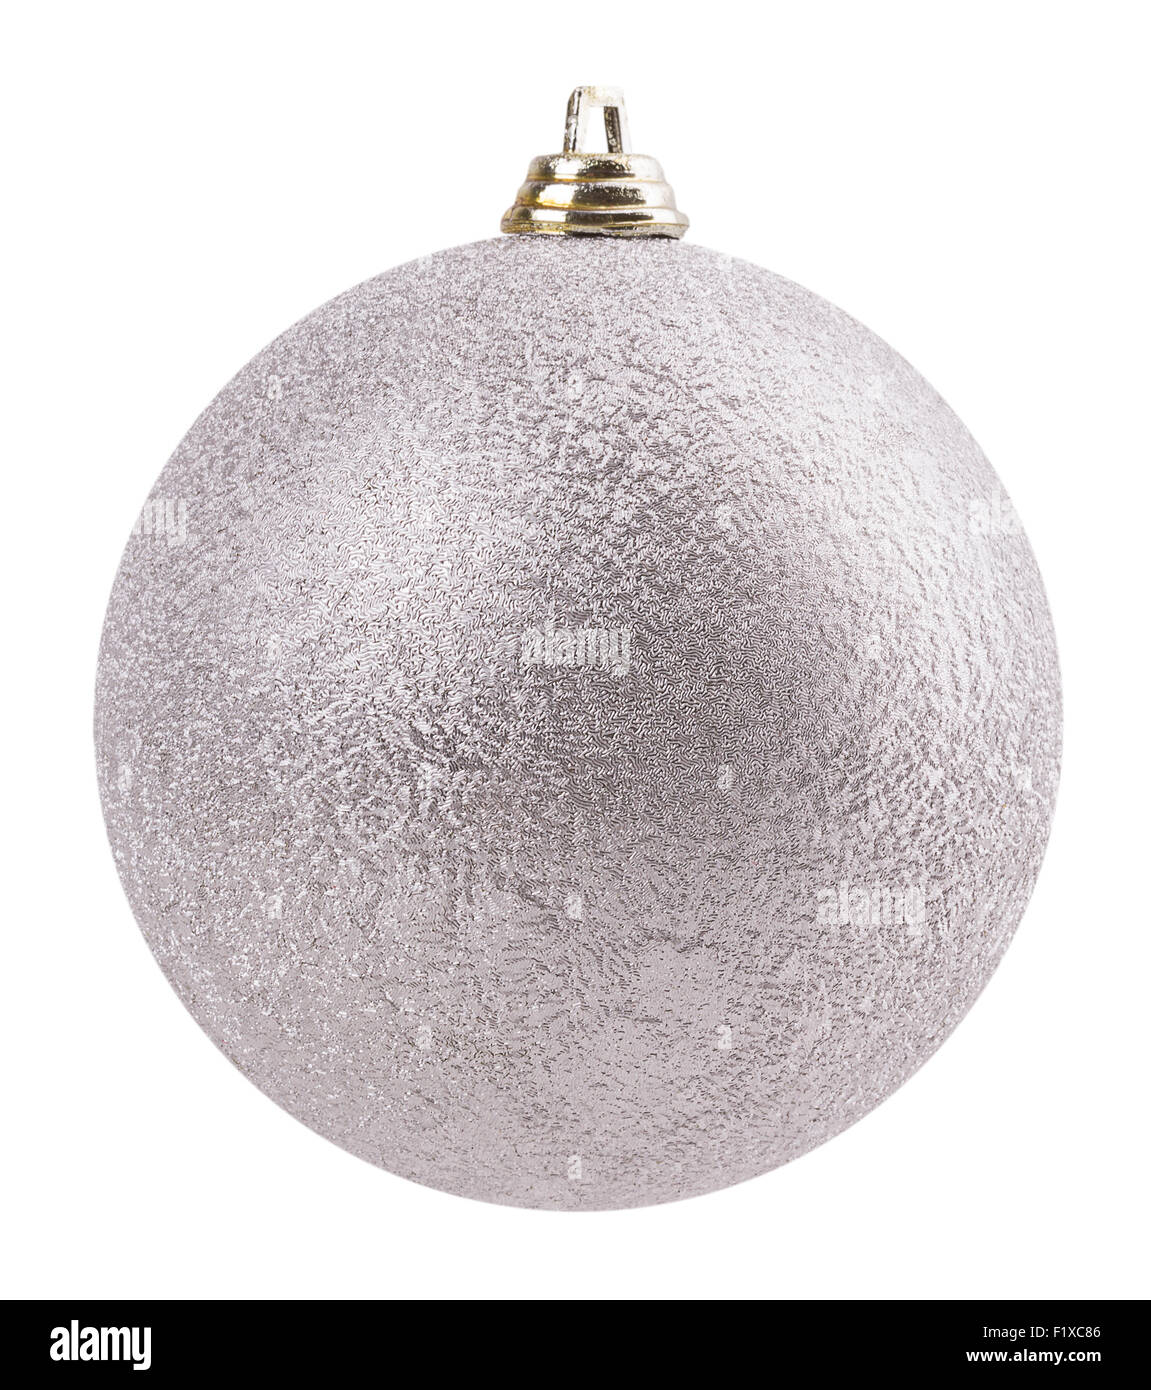 silver Christmas ball on white background. Stock Photo